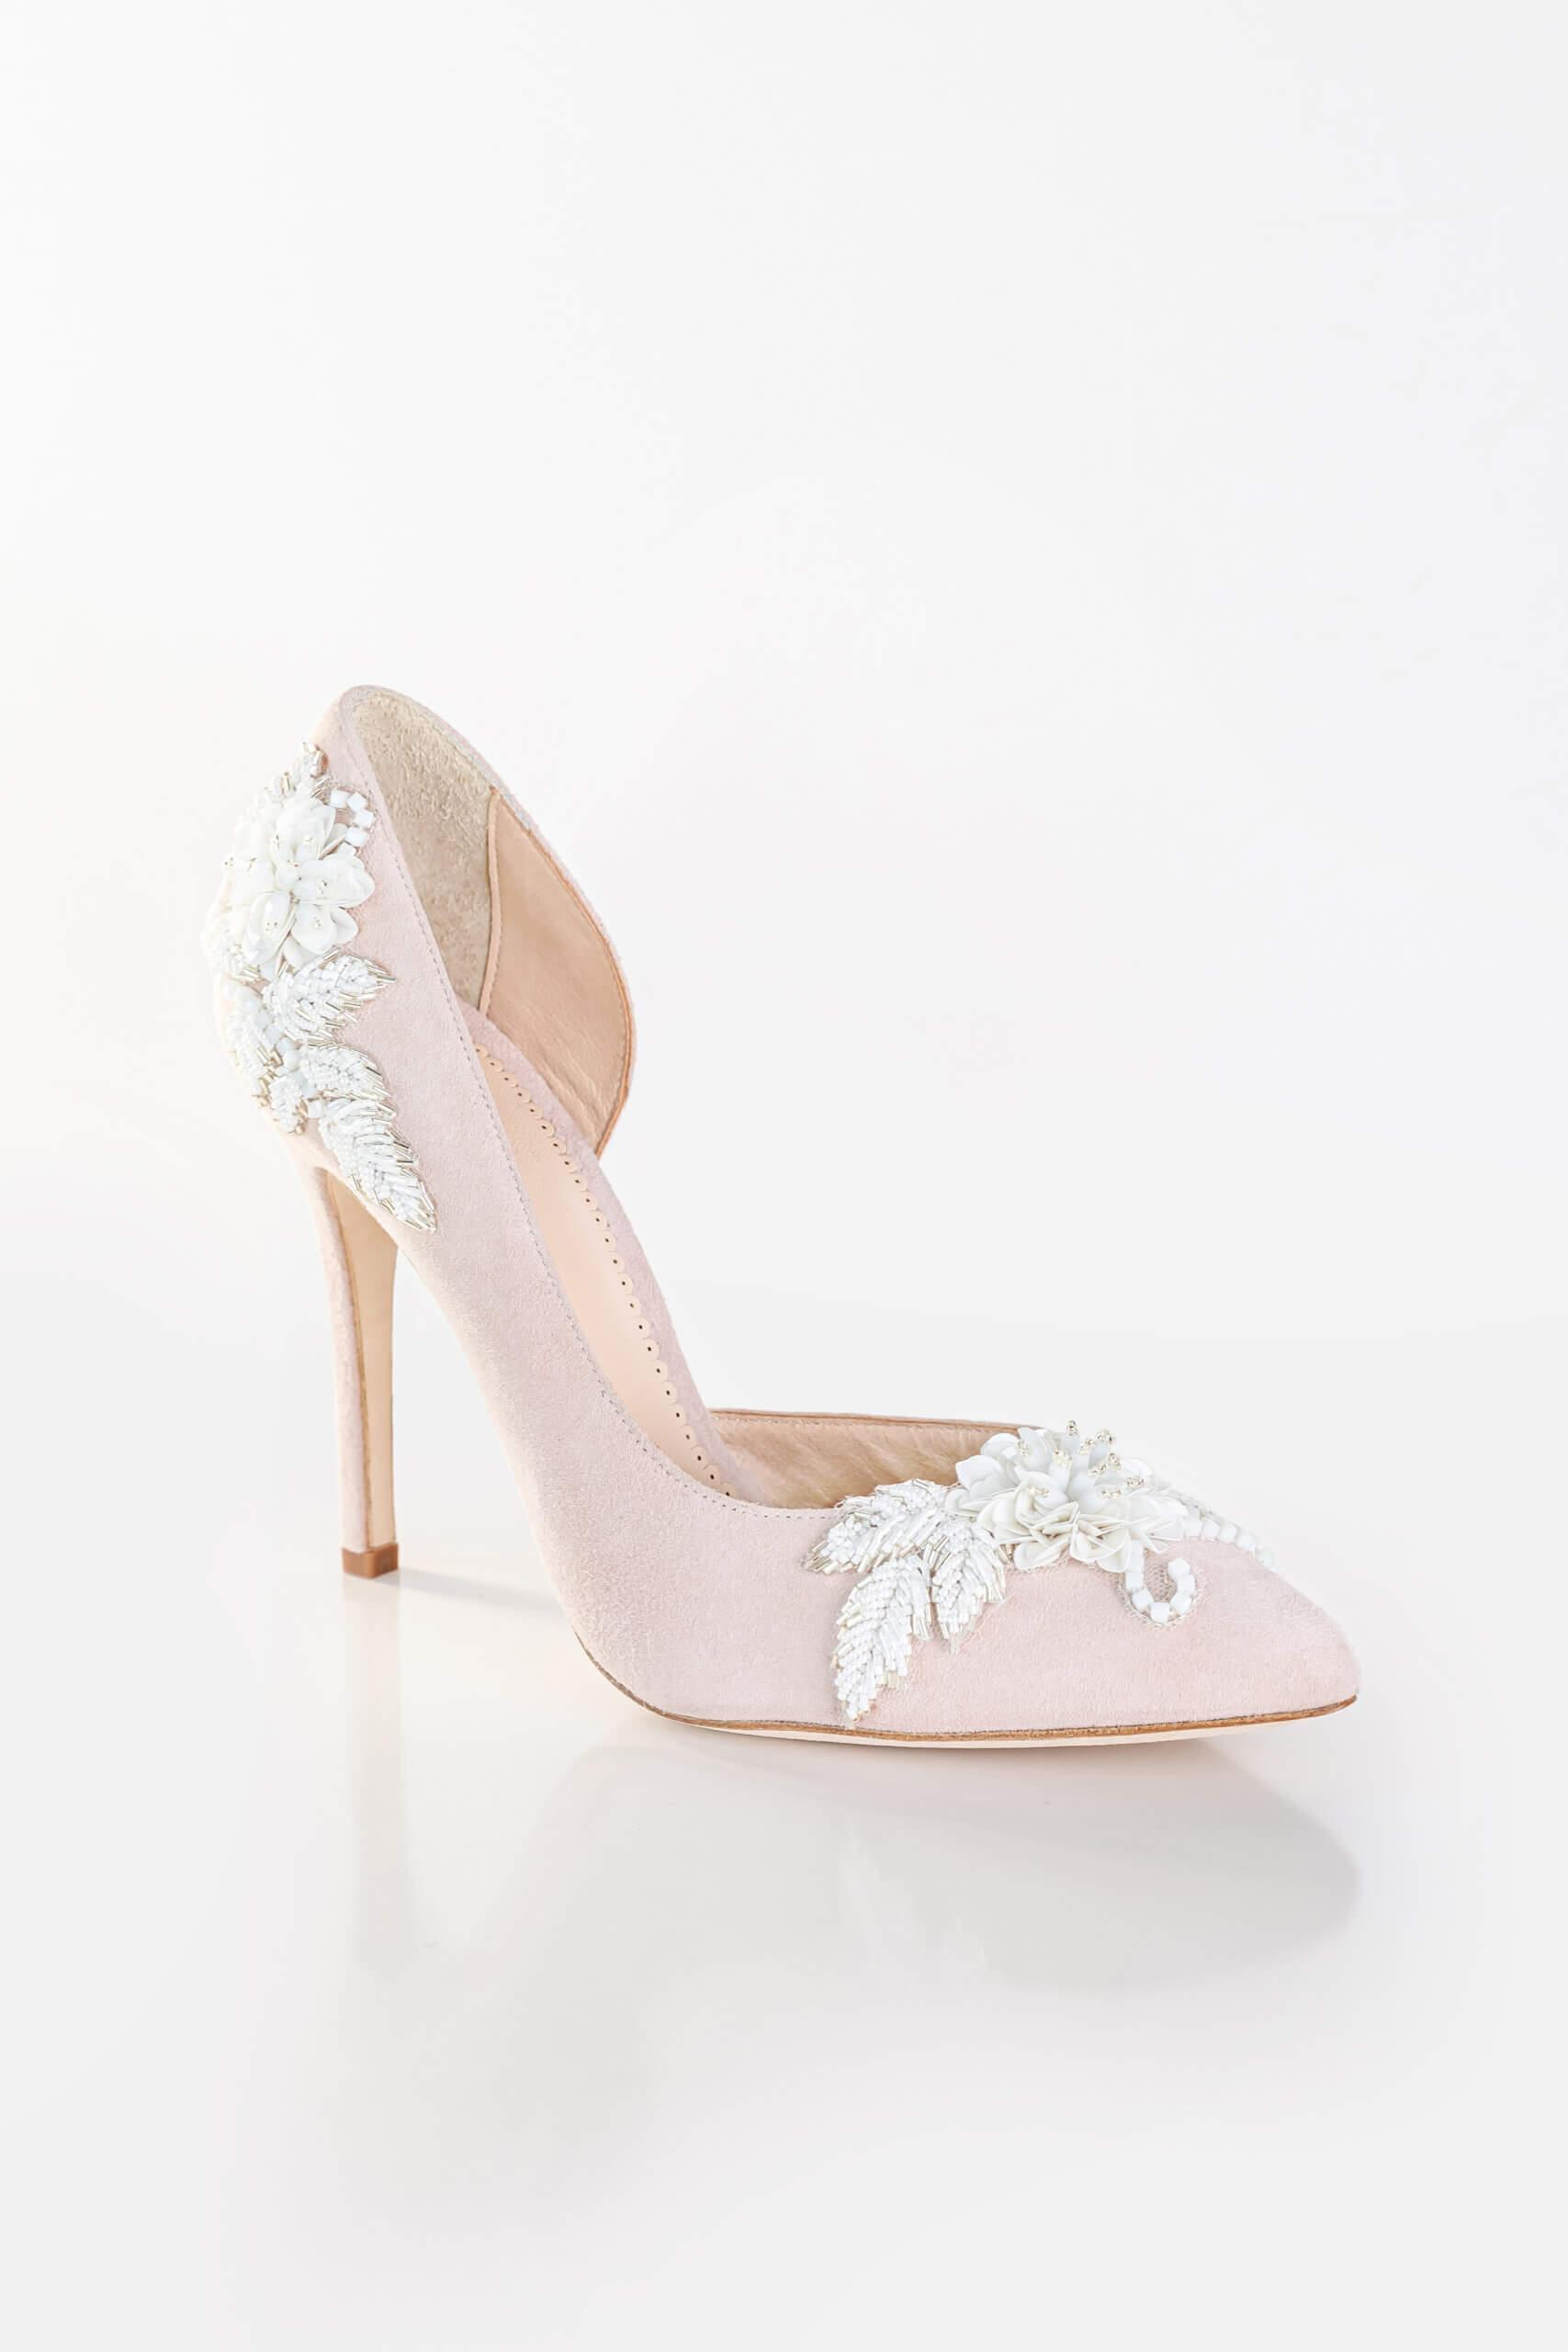 Champagne Wedding Shoes Rhinestone Stiletto Heels Bridal Sandals|FSJshoes-hkpdtq2012.edu.vn